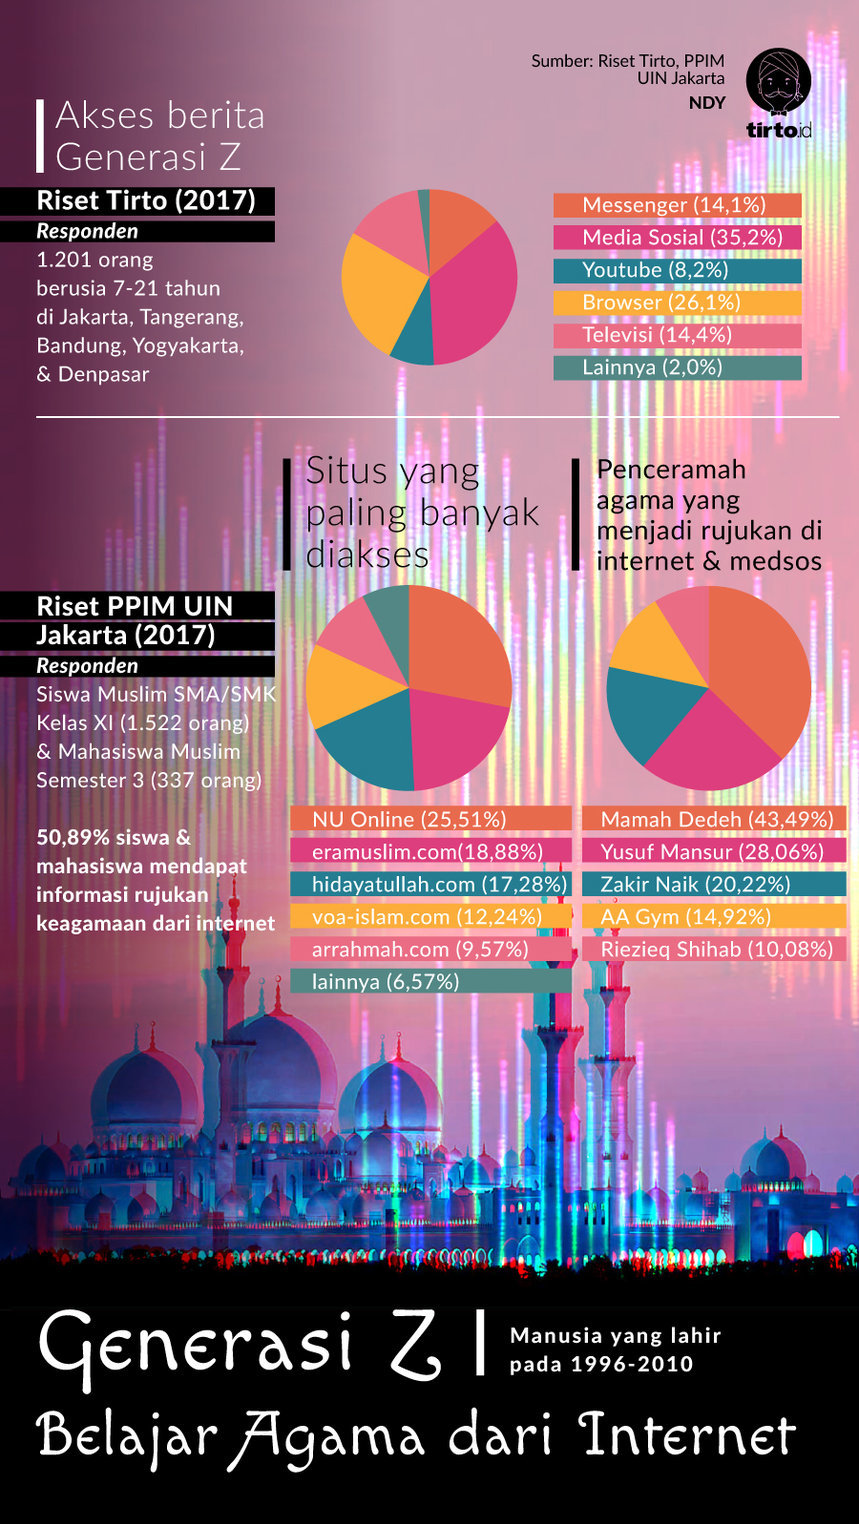 Infografik Gen Z belajar agama dari internet